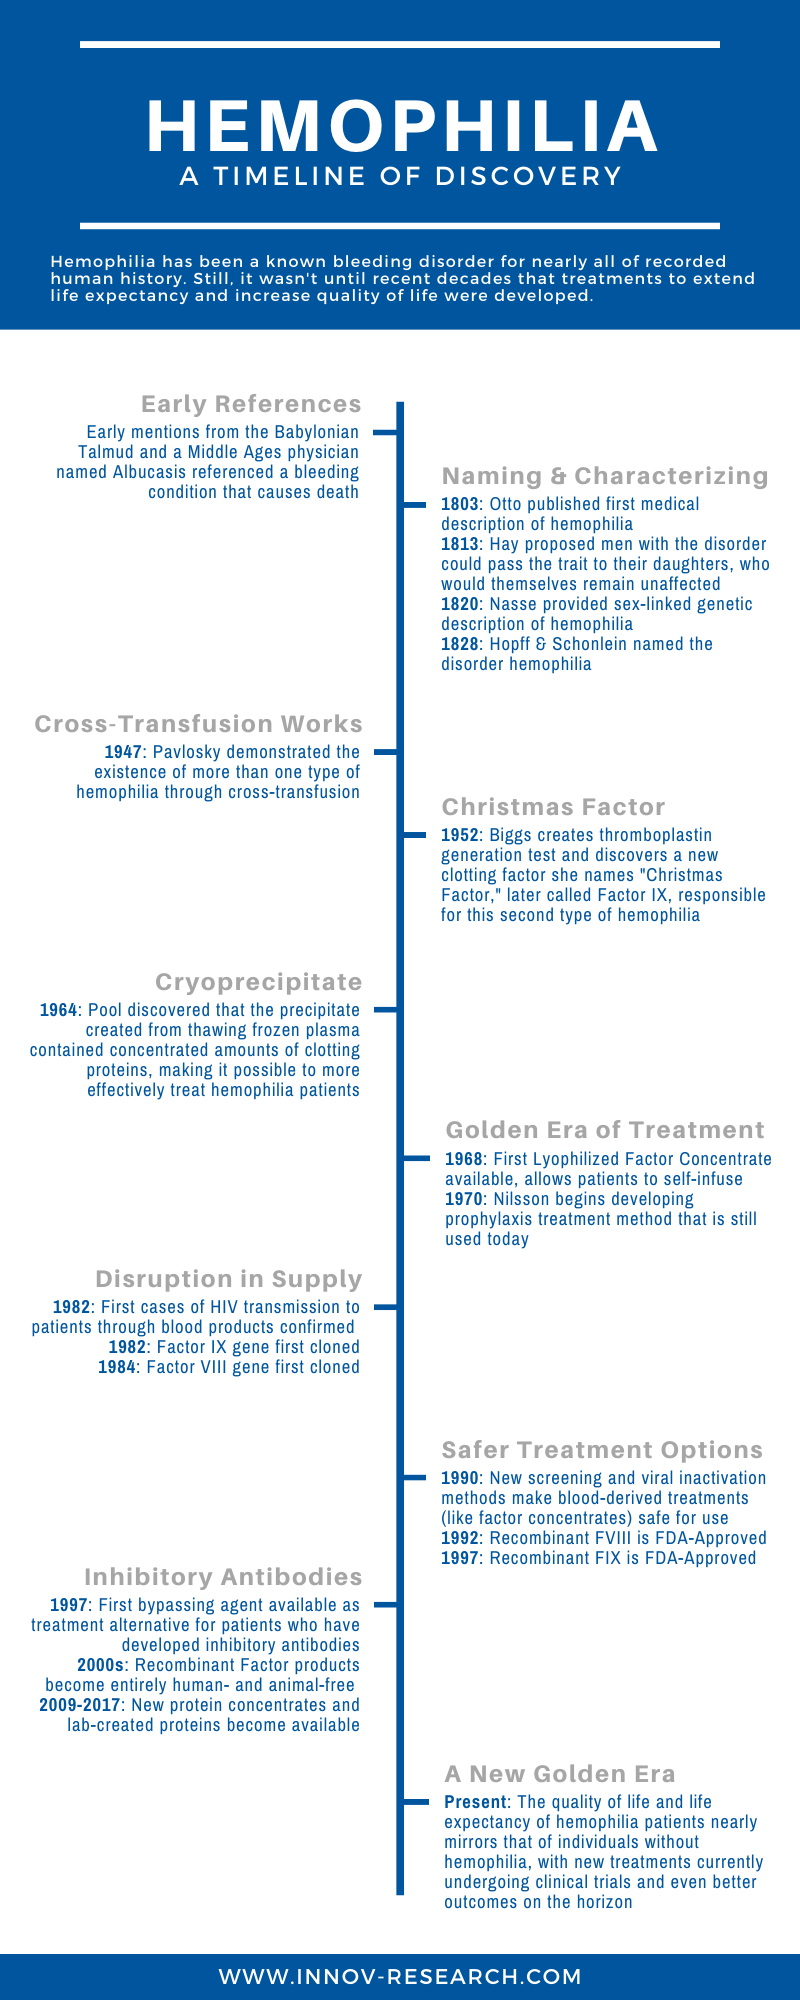 Timeline of Milestone in Hemophilia Research